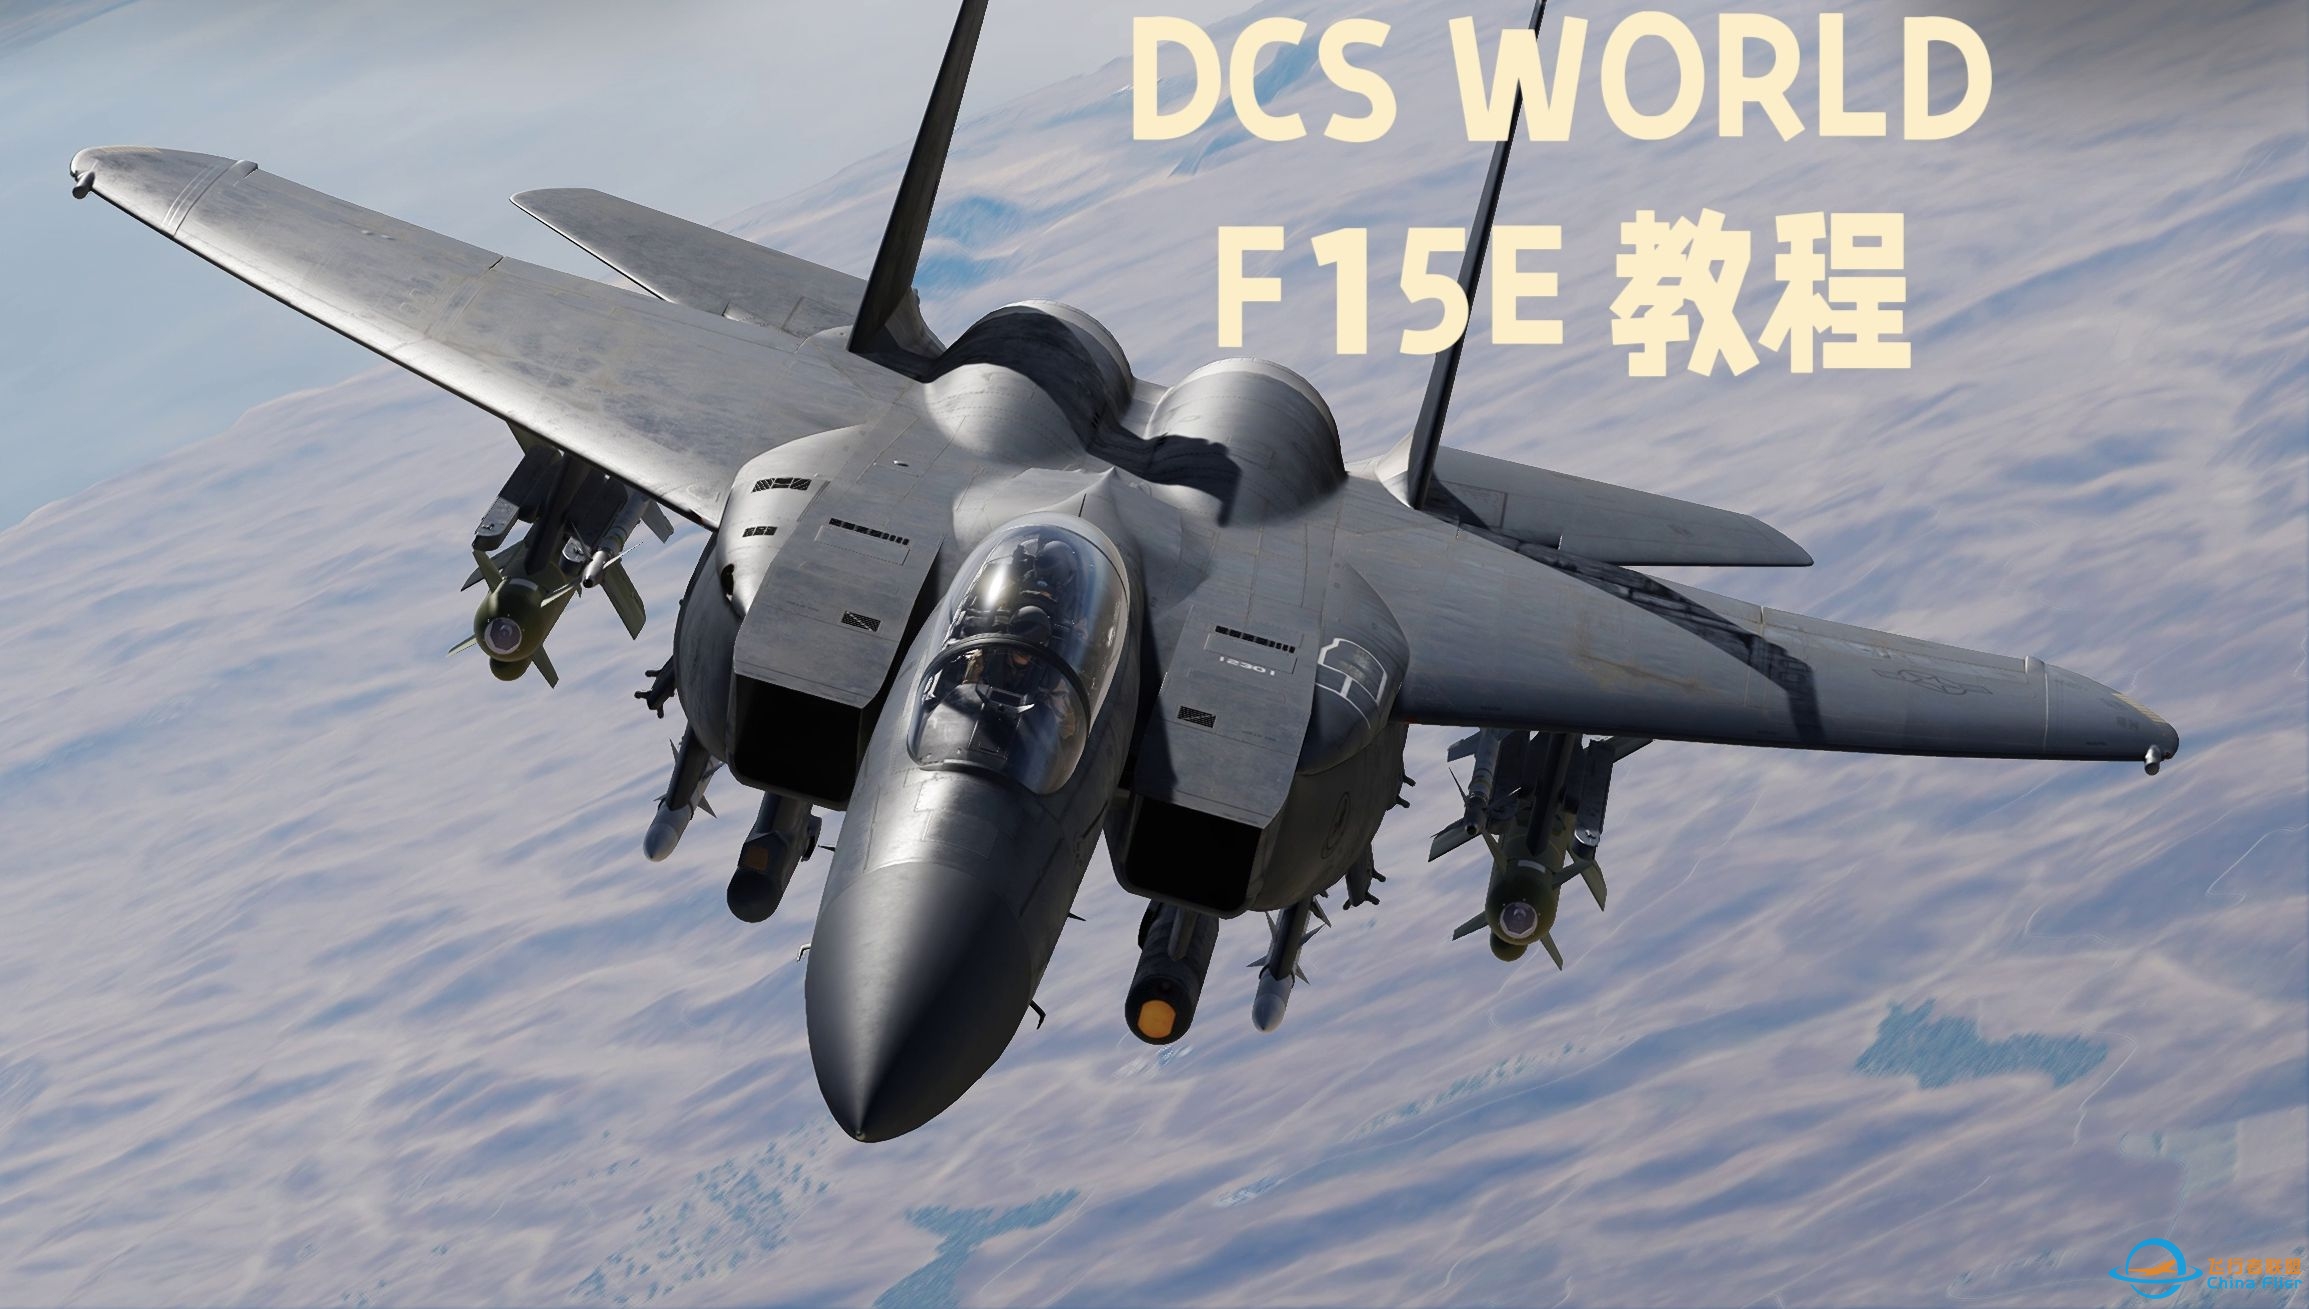 【DCS WORLD F15E教程】第四期 NAV FLIR导航前视红外和地形跟随雷达-166 